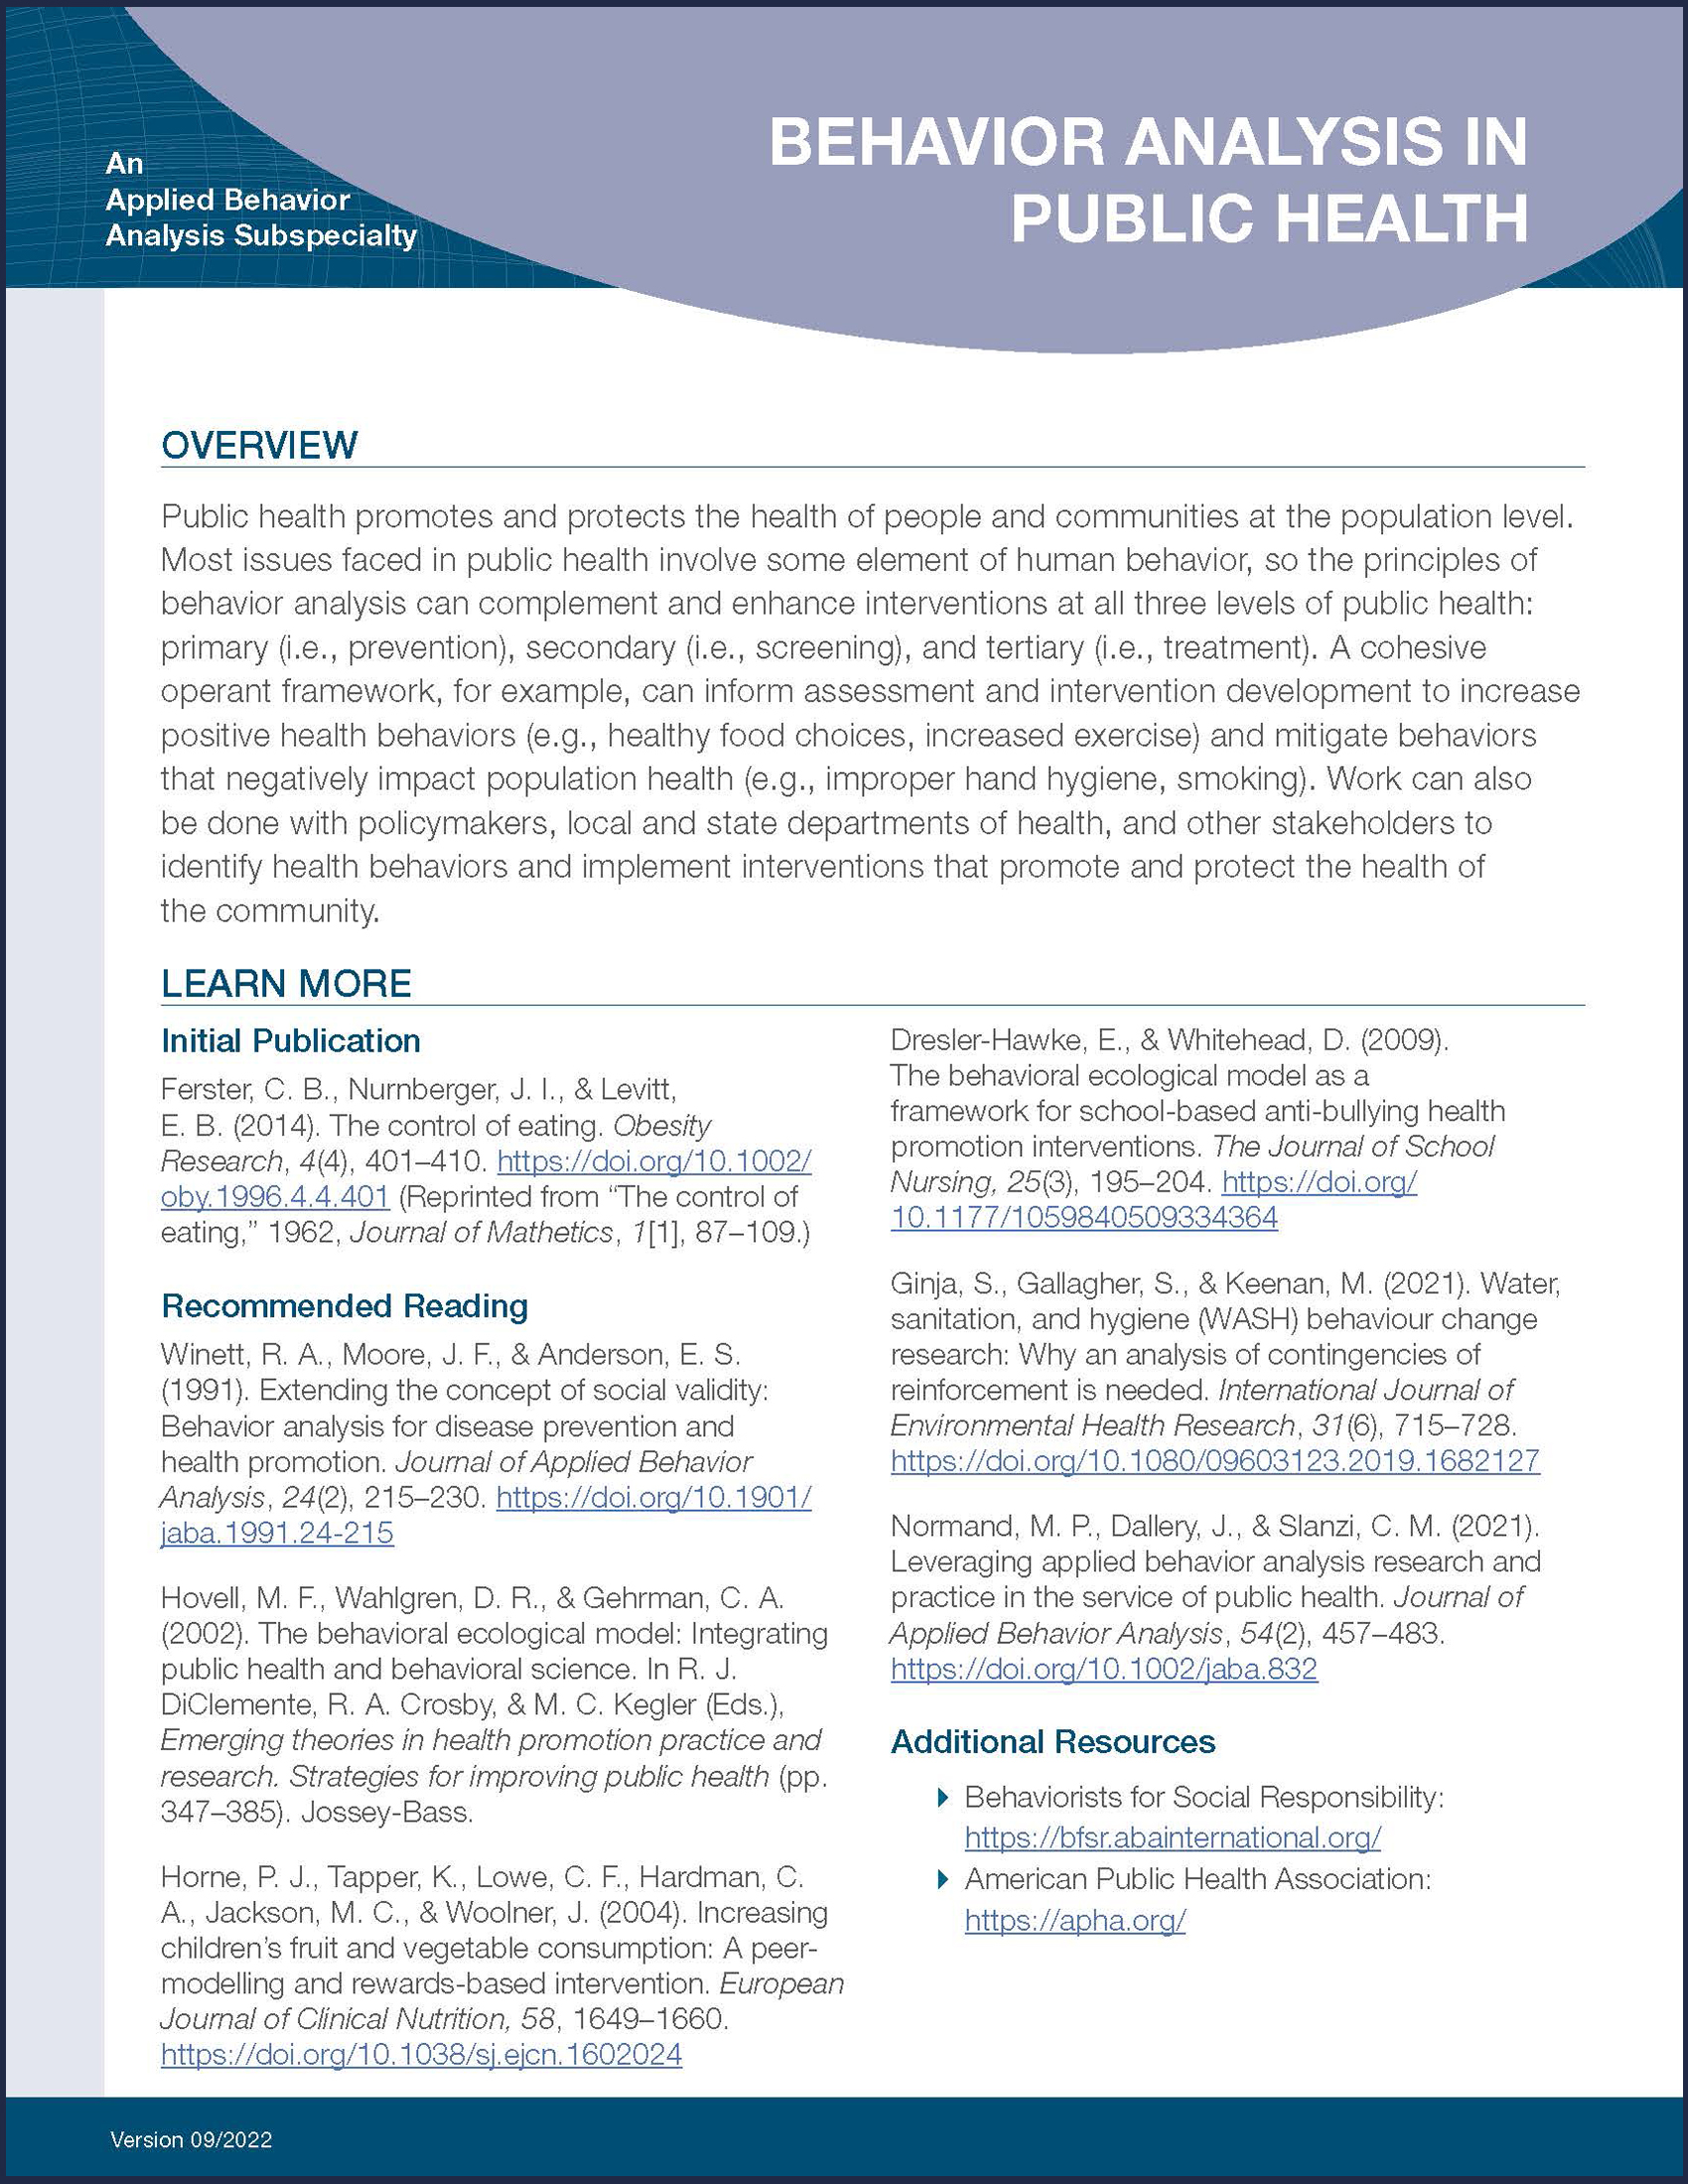 Behavior Analysis in Public Health Subspecialty Fact Sheet thumbnail